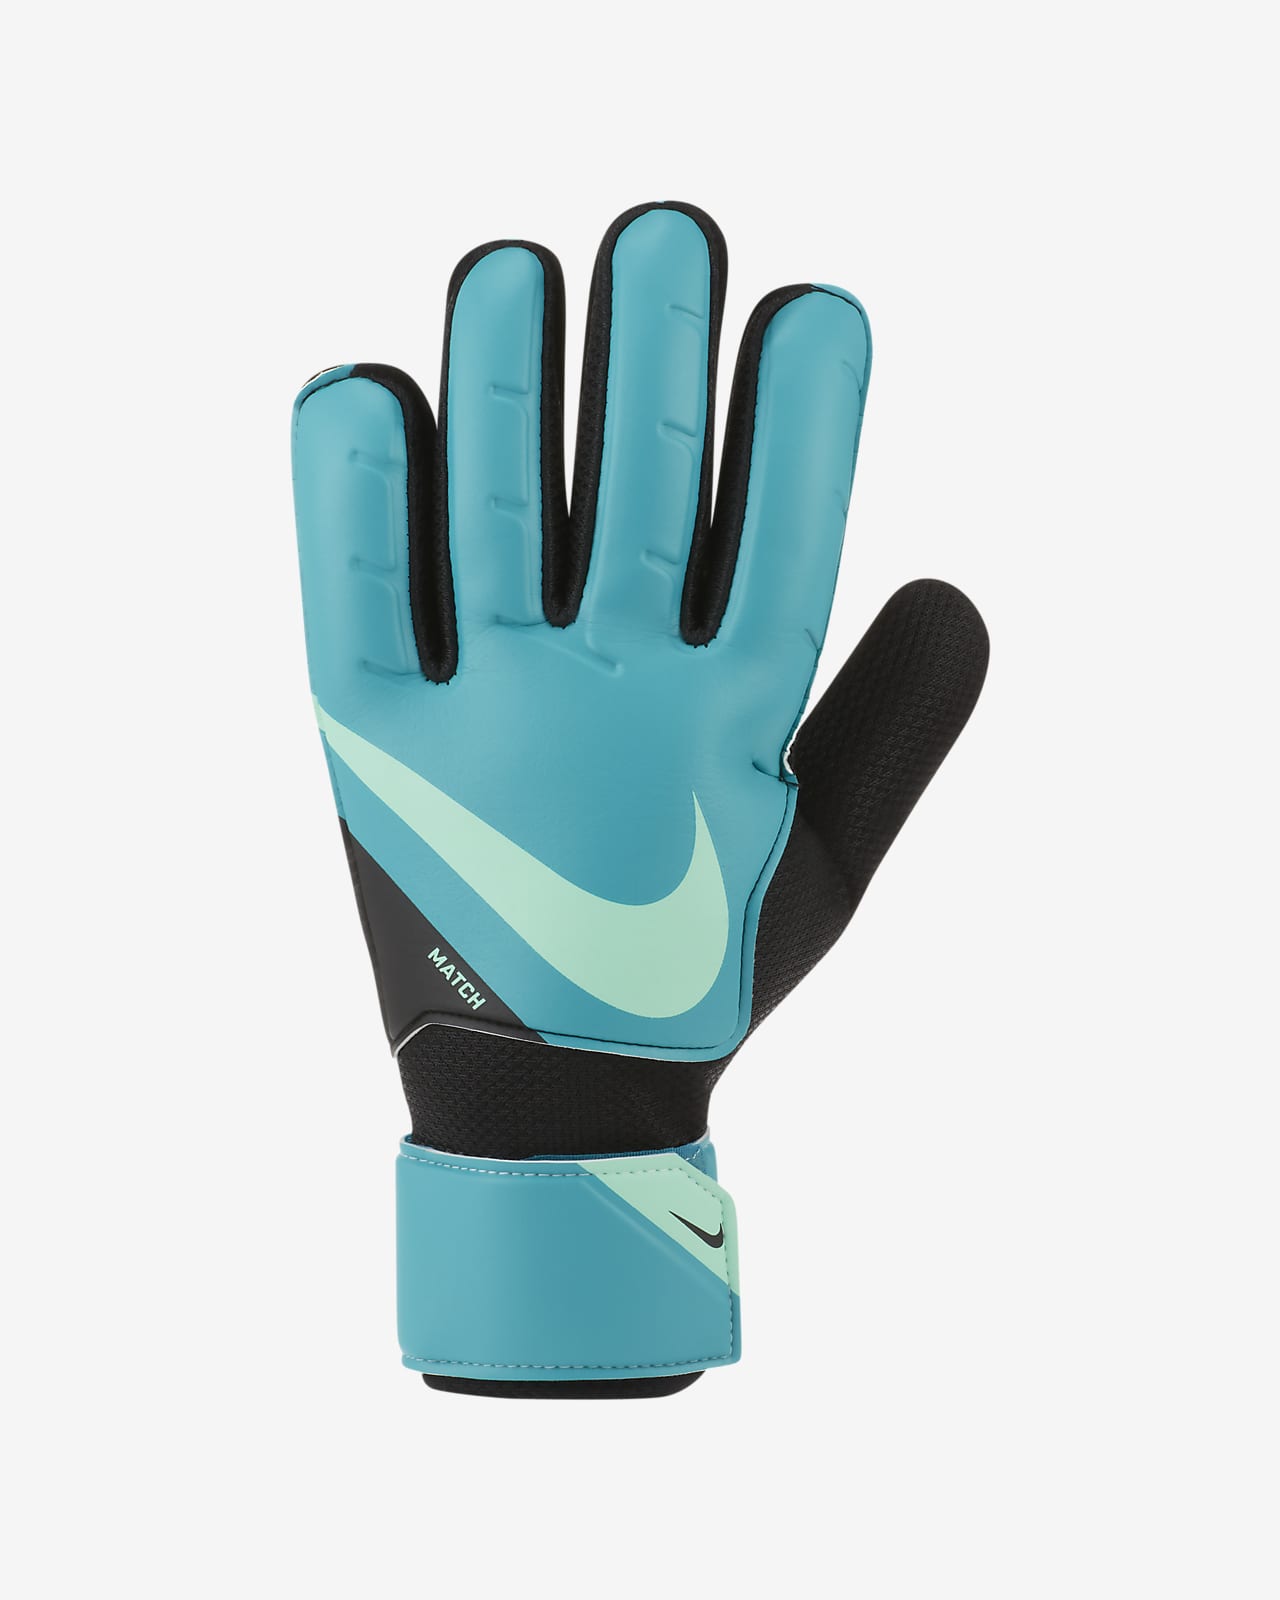 Nike Goalkeeper Match Football Gloves